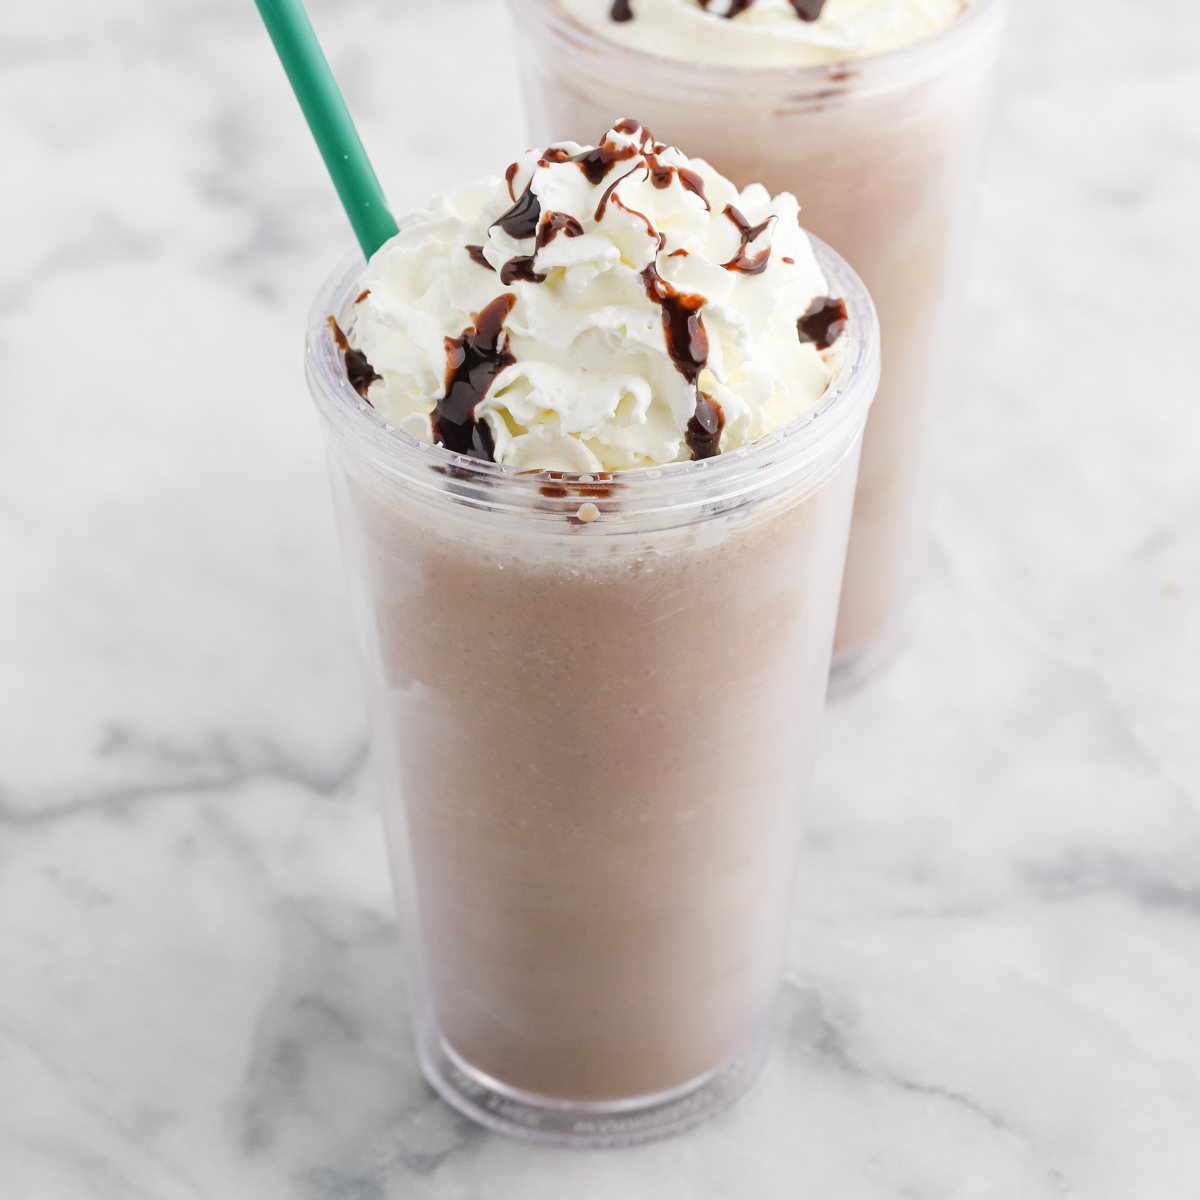 Starbucks Frappuccino Coffee Drink Mocha